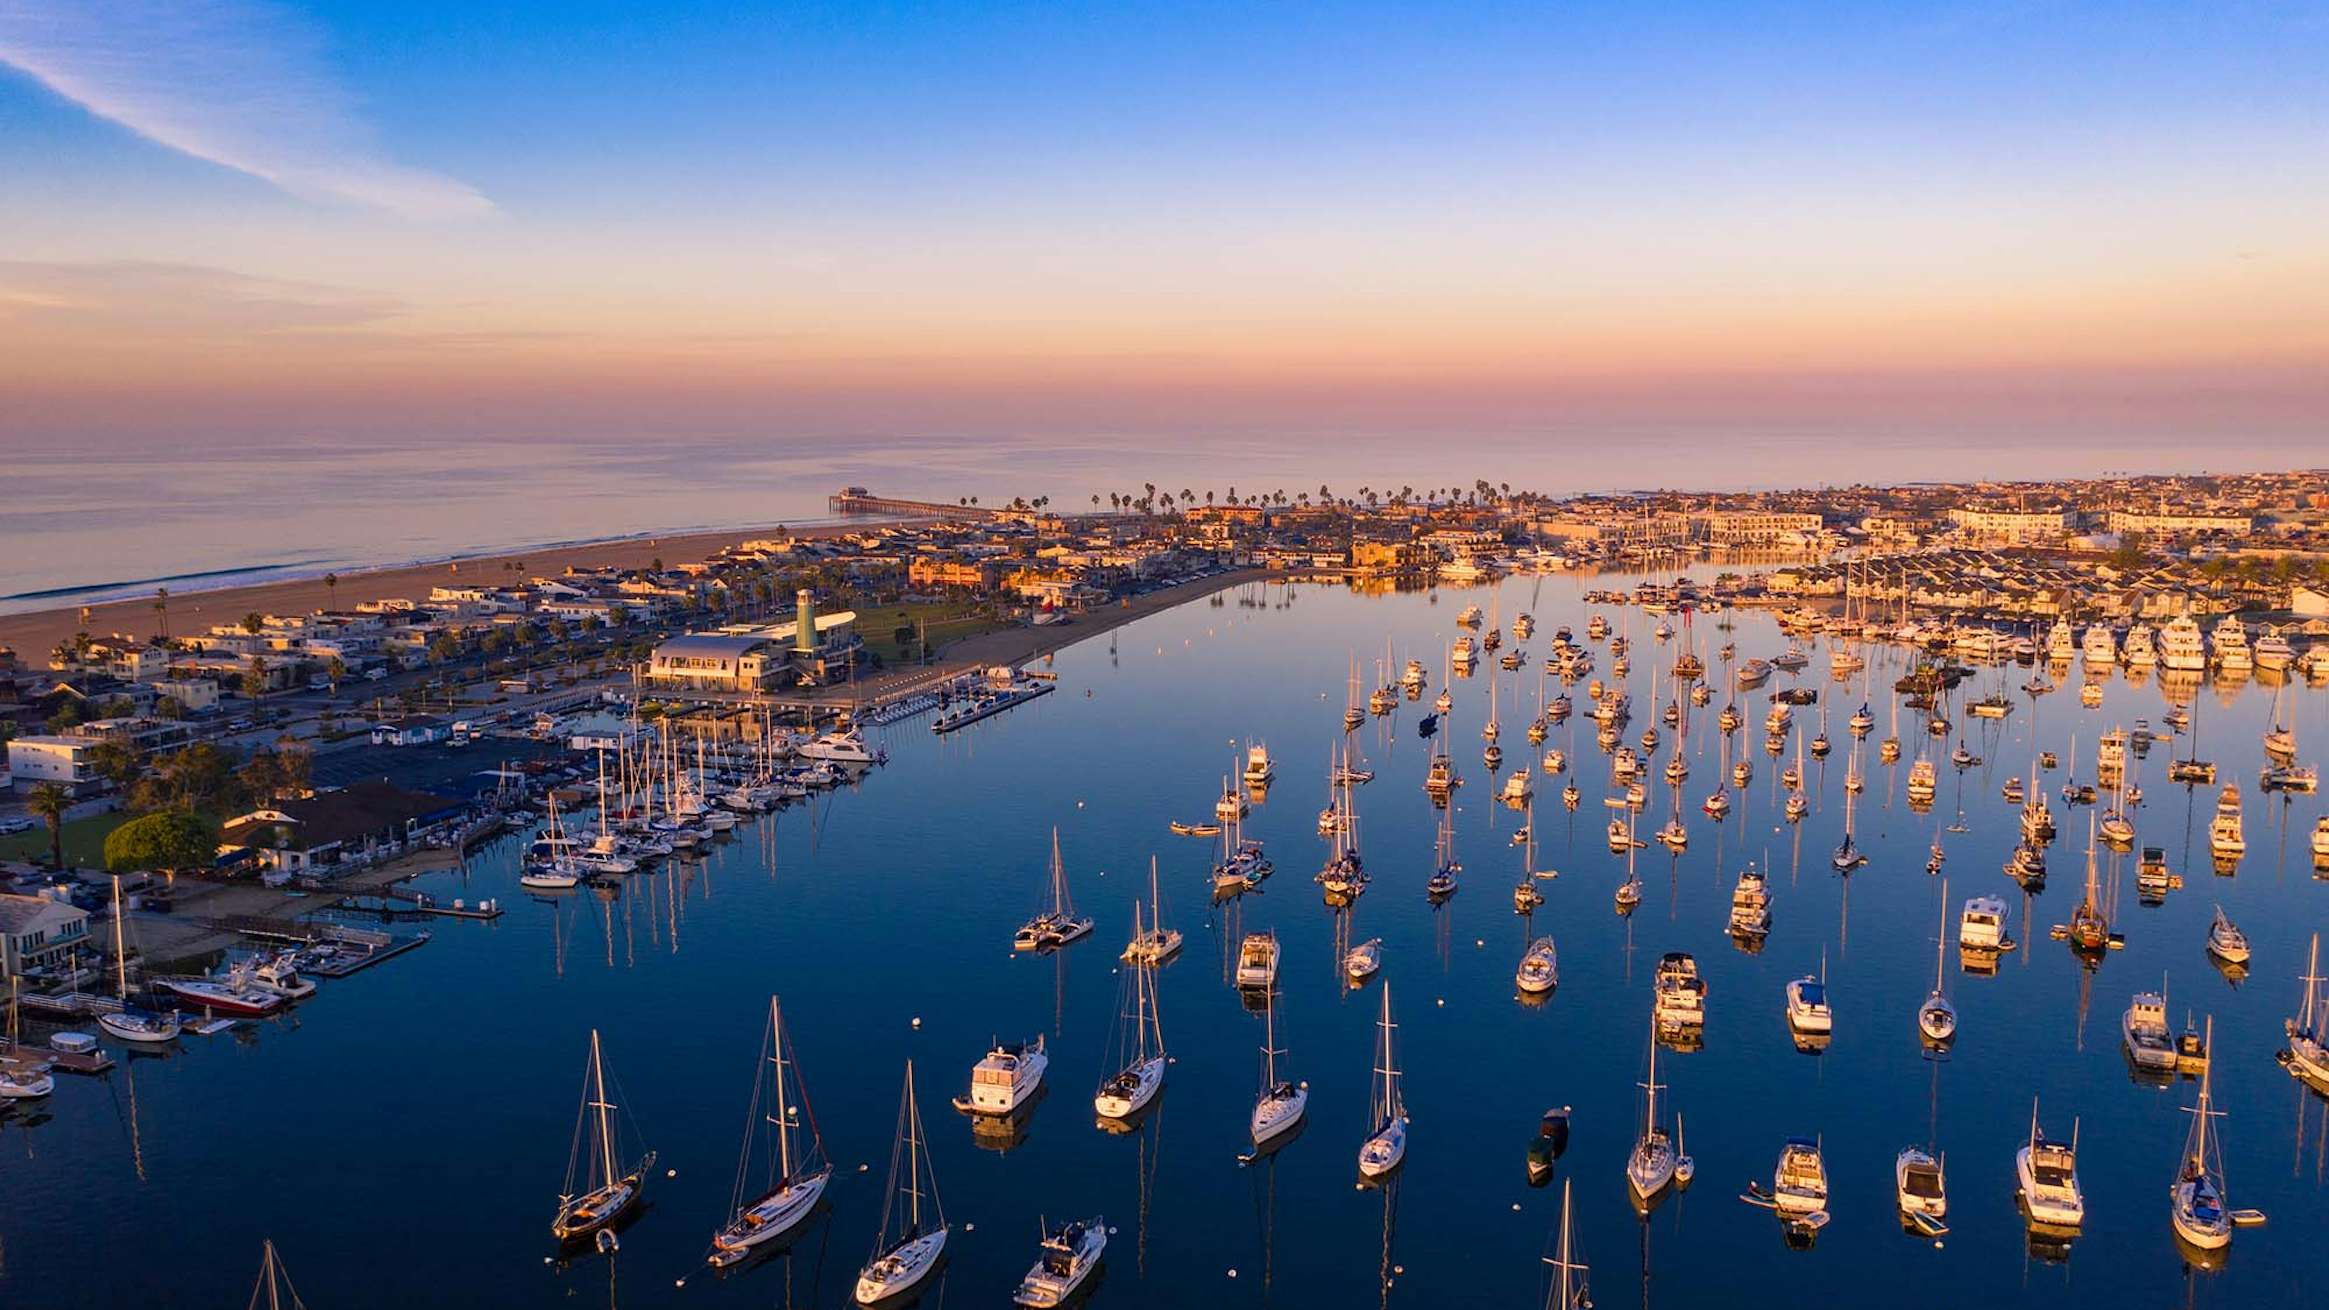 Newport Beach International Boat Show at Sunset